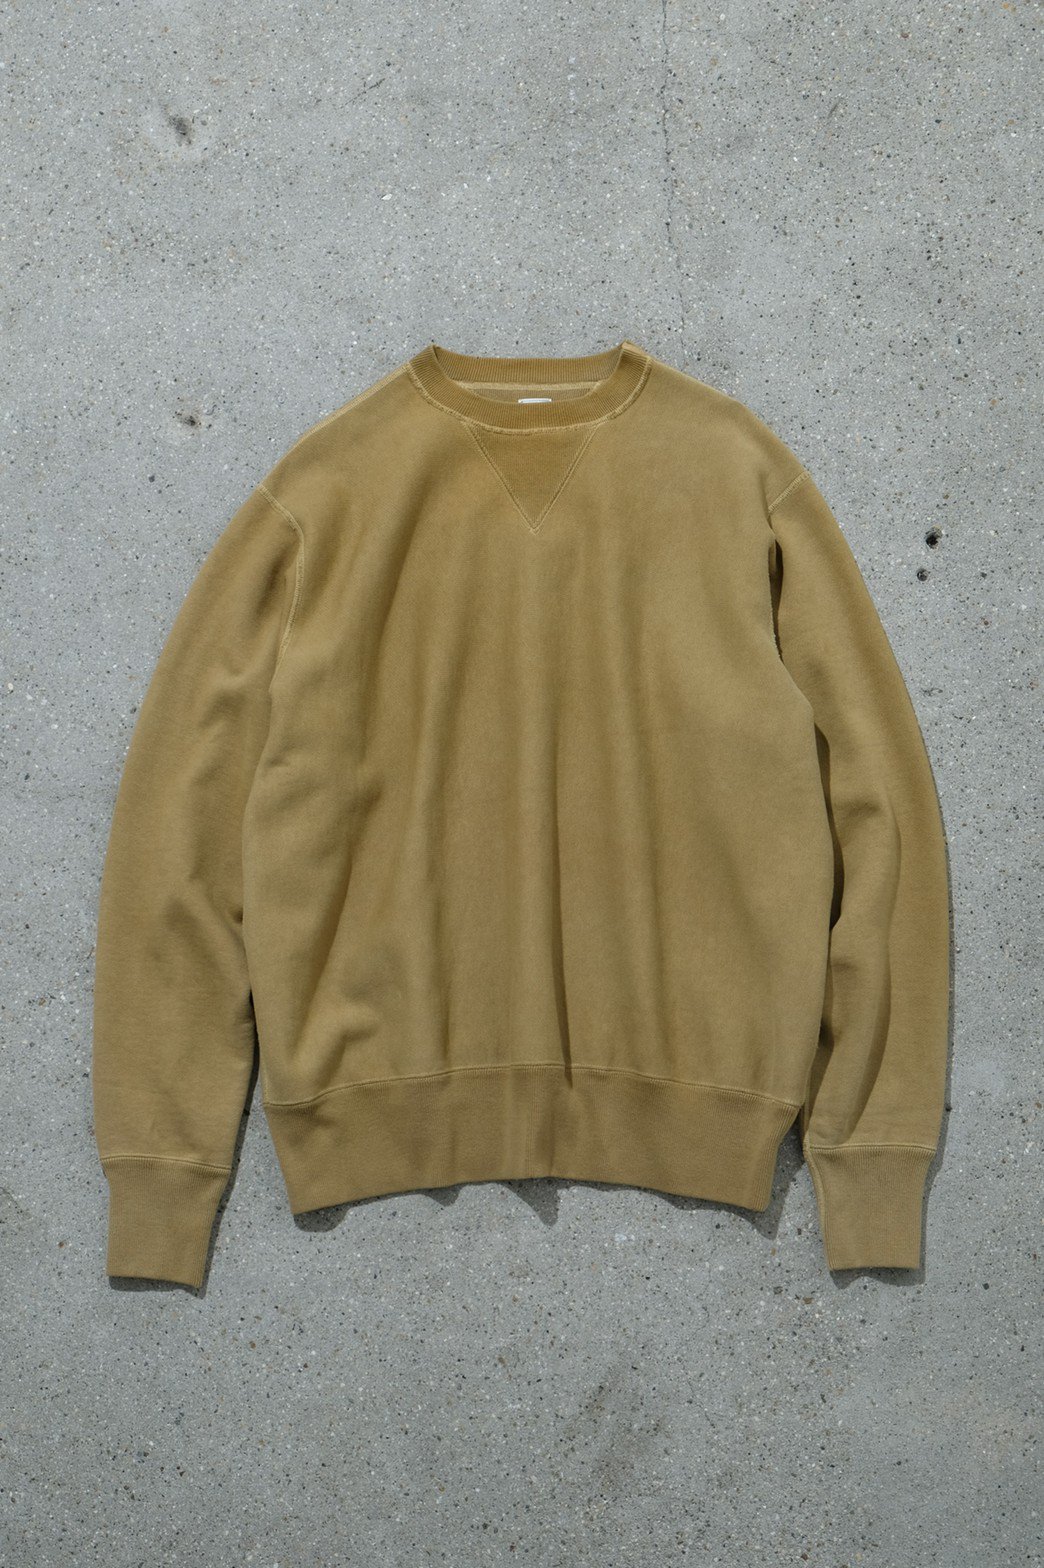 A.PRESSE / Vintage Sweatshirt GOLD